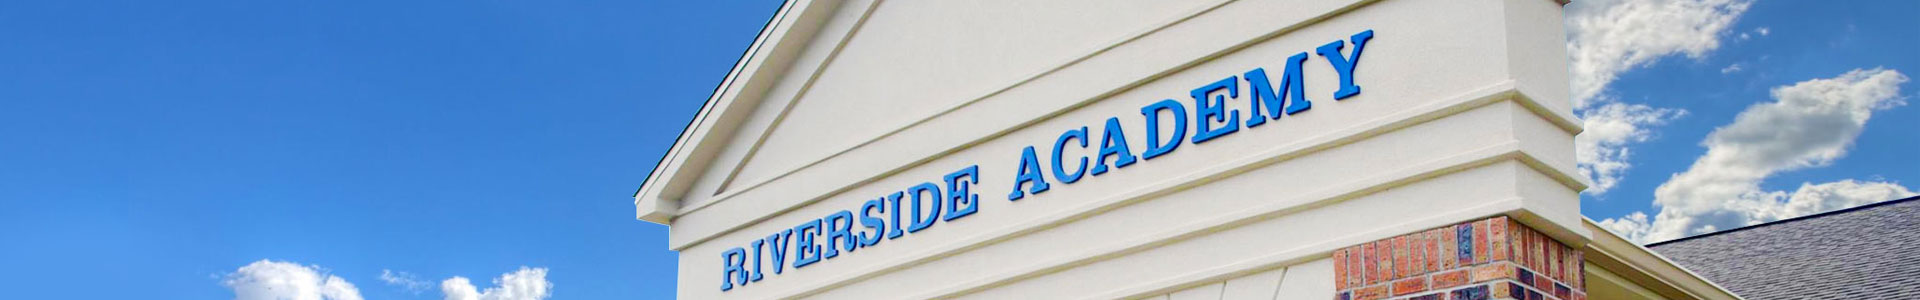 riverside academy header image